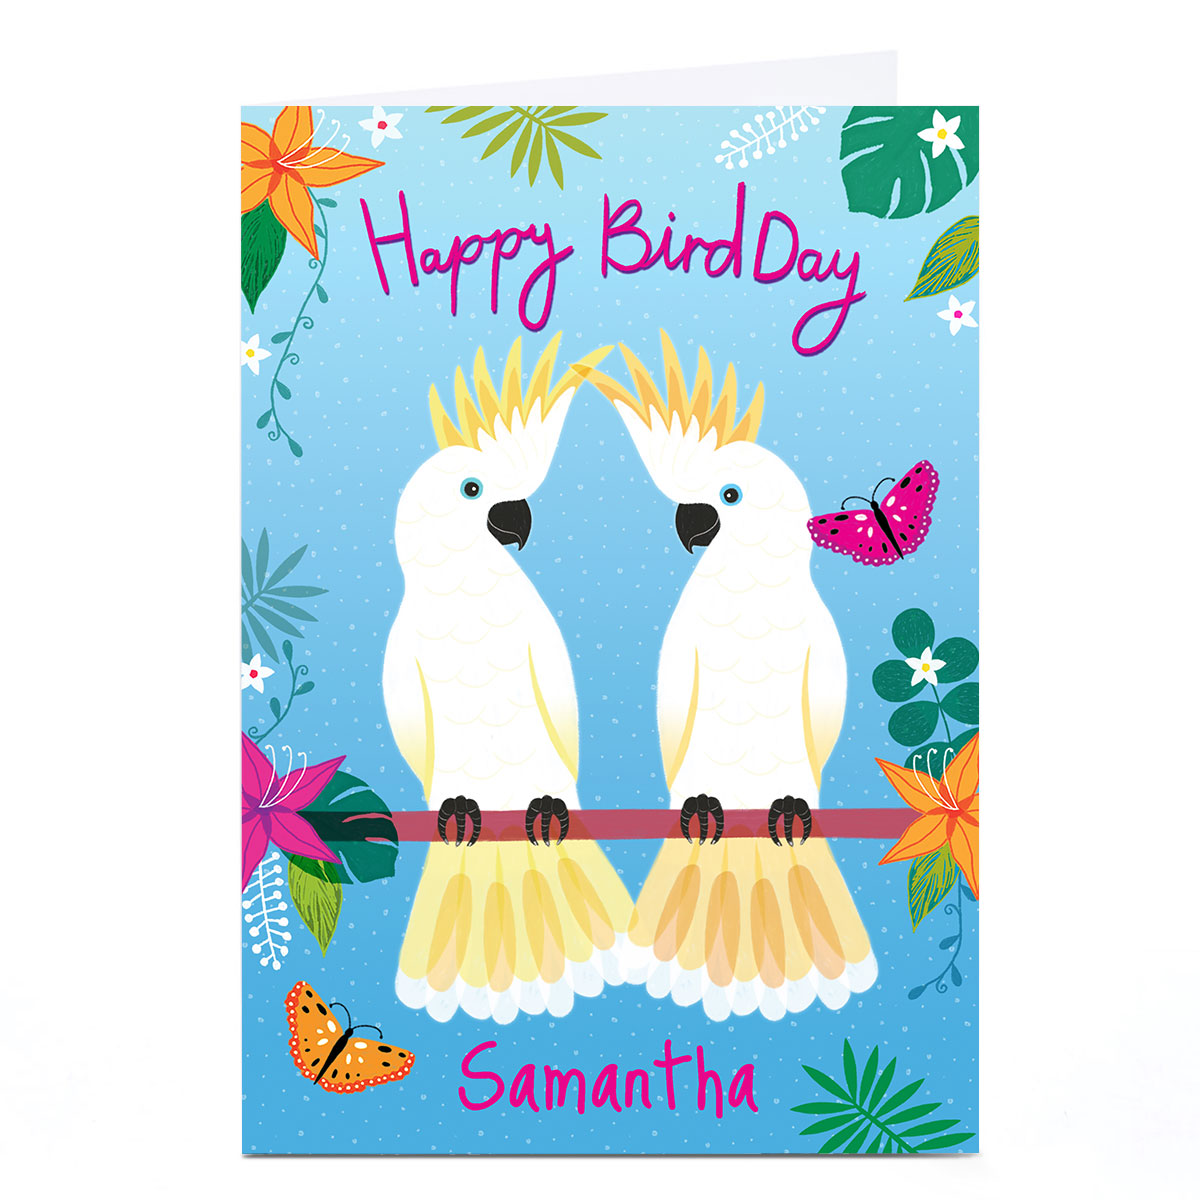 Personalised Hannah Steele Birthday Card - Happy BirdDay